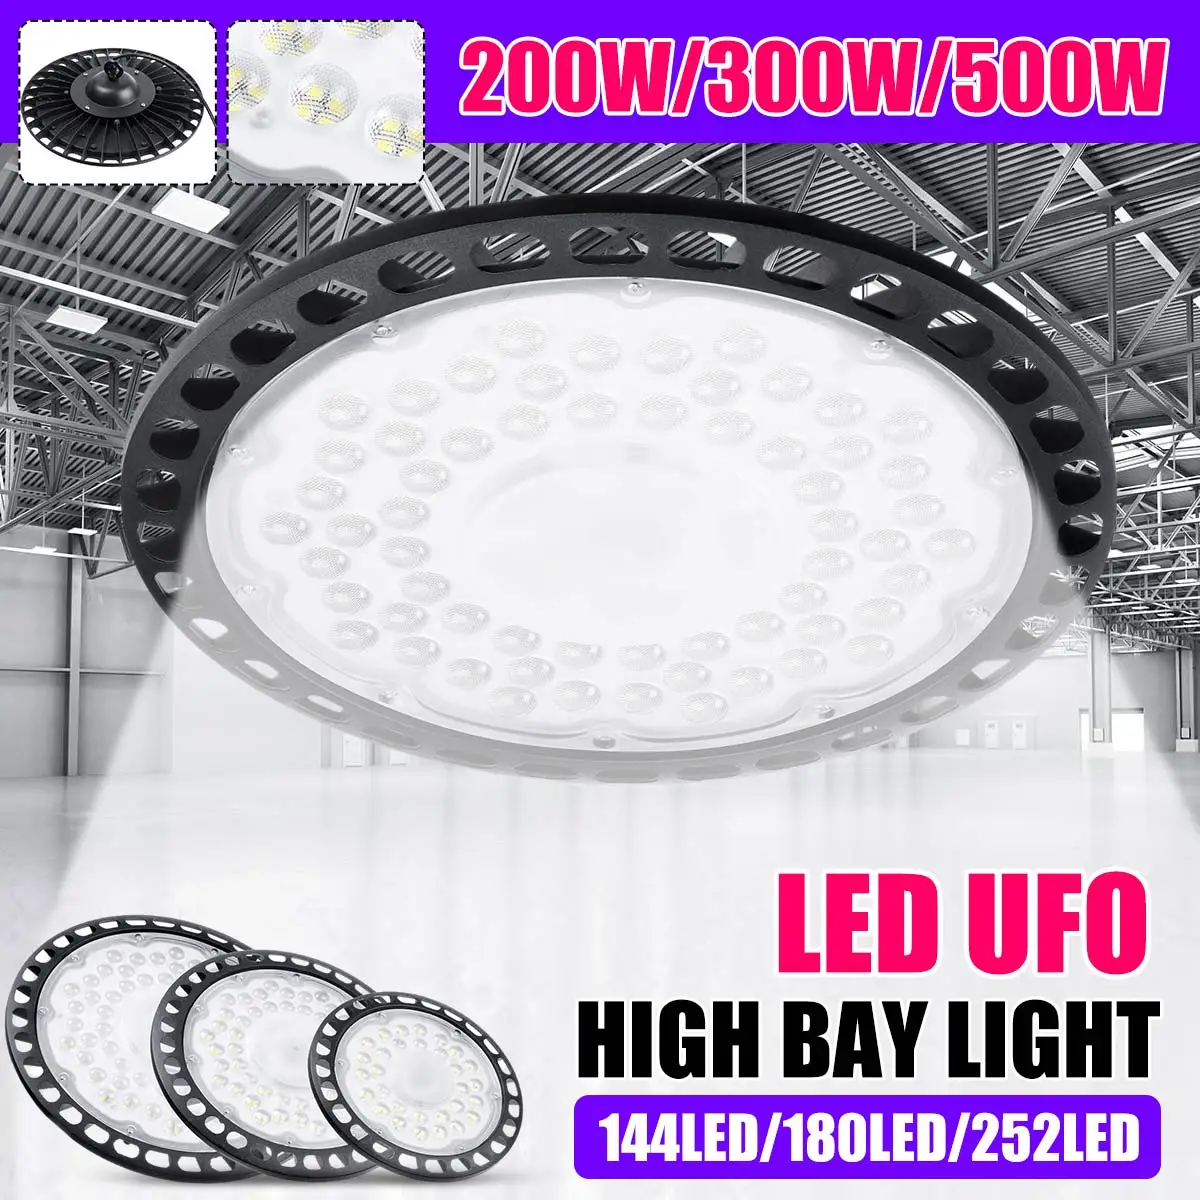 UFO LED High Bay Light 100/200/300/500W Low Bay Warehouse Industrial Light Fedex 